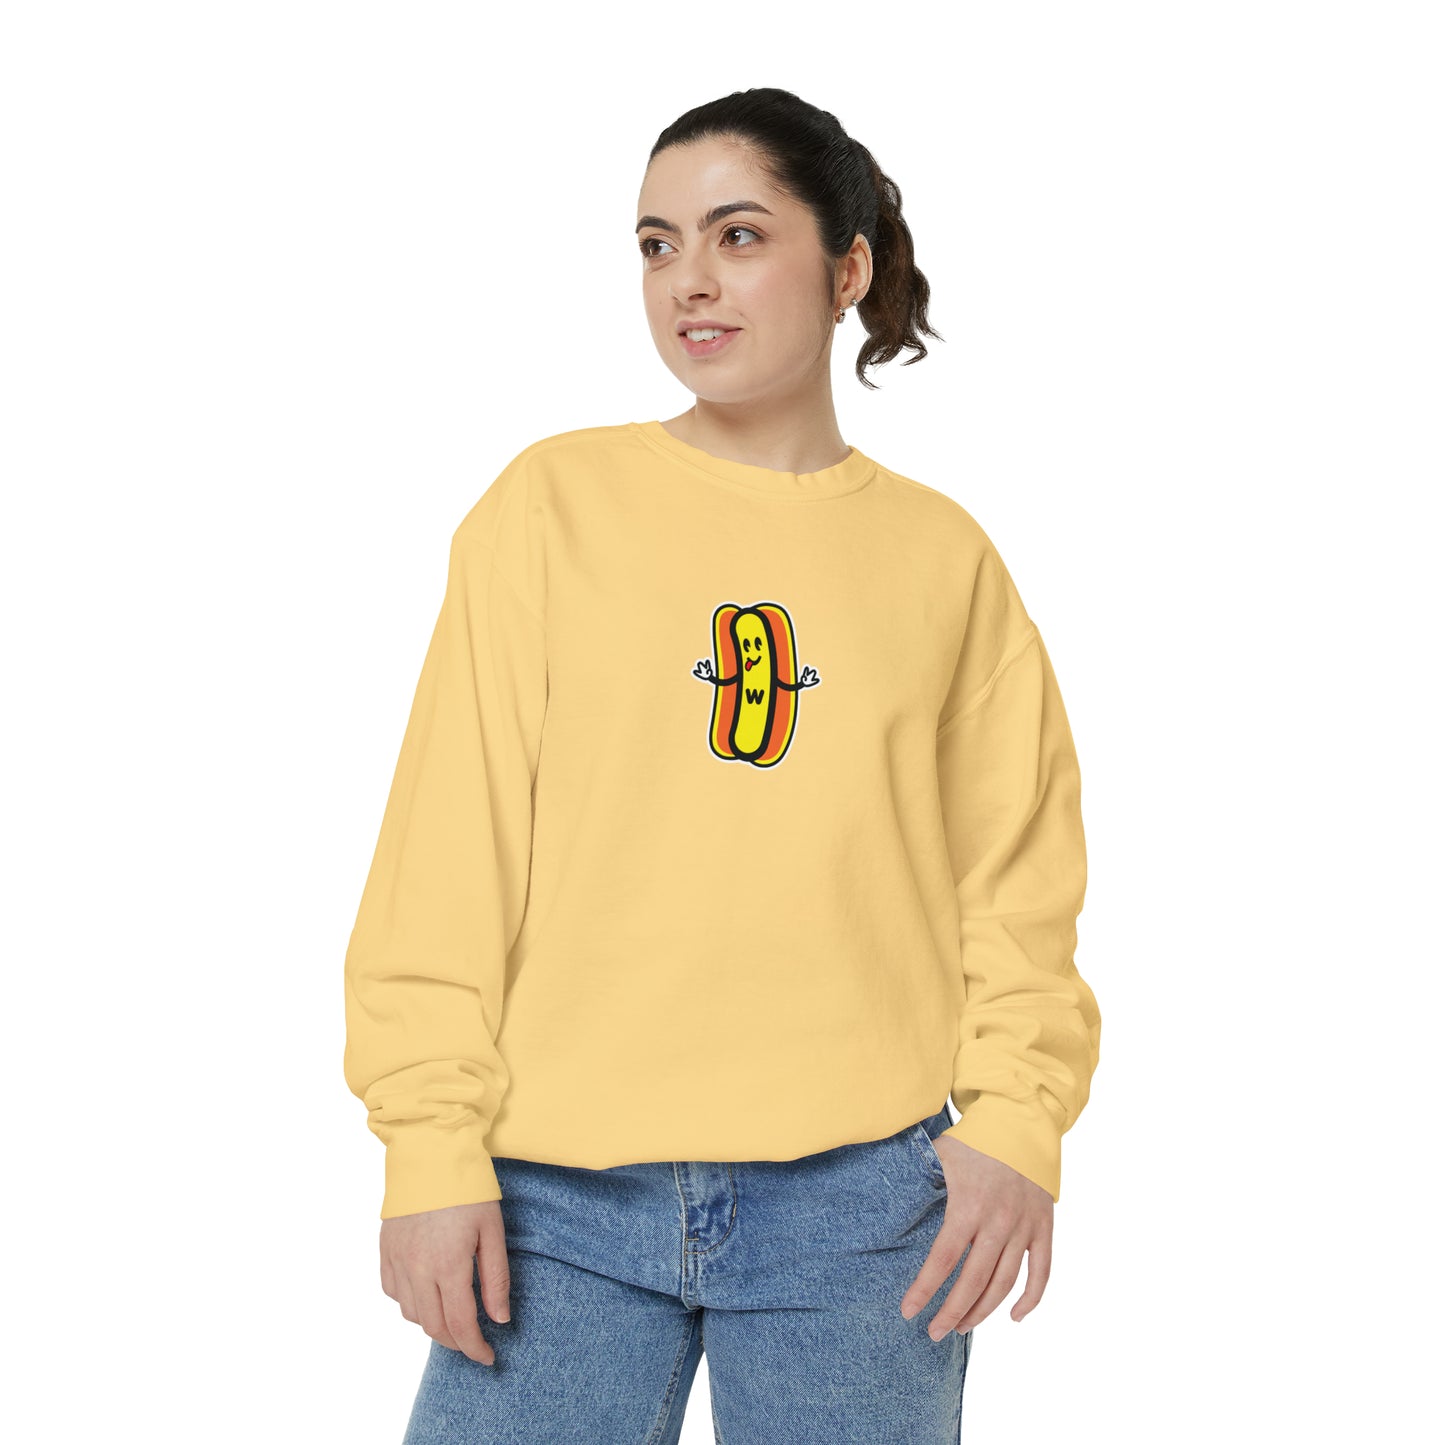 Wonder Wieners Crewneck Sweatshirt - Logo Front, 'Stuffin Buns Since 2001' Back